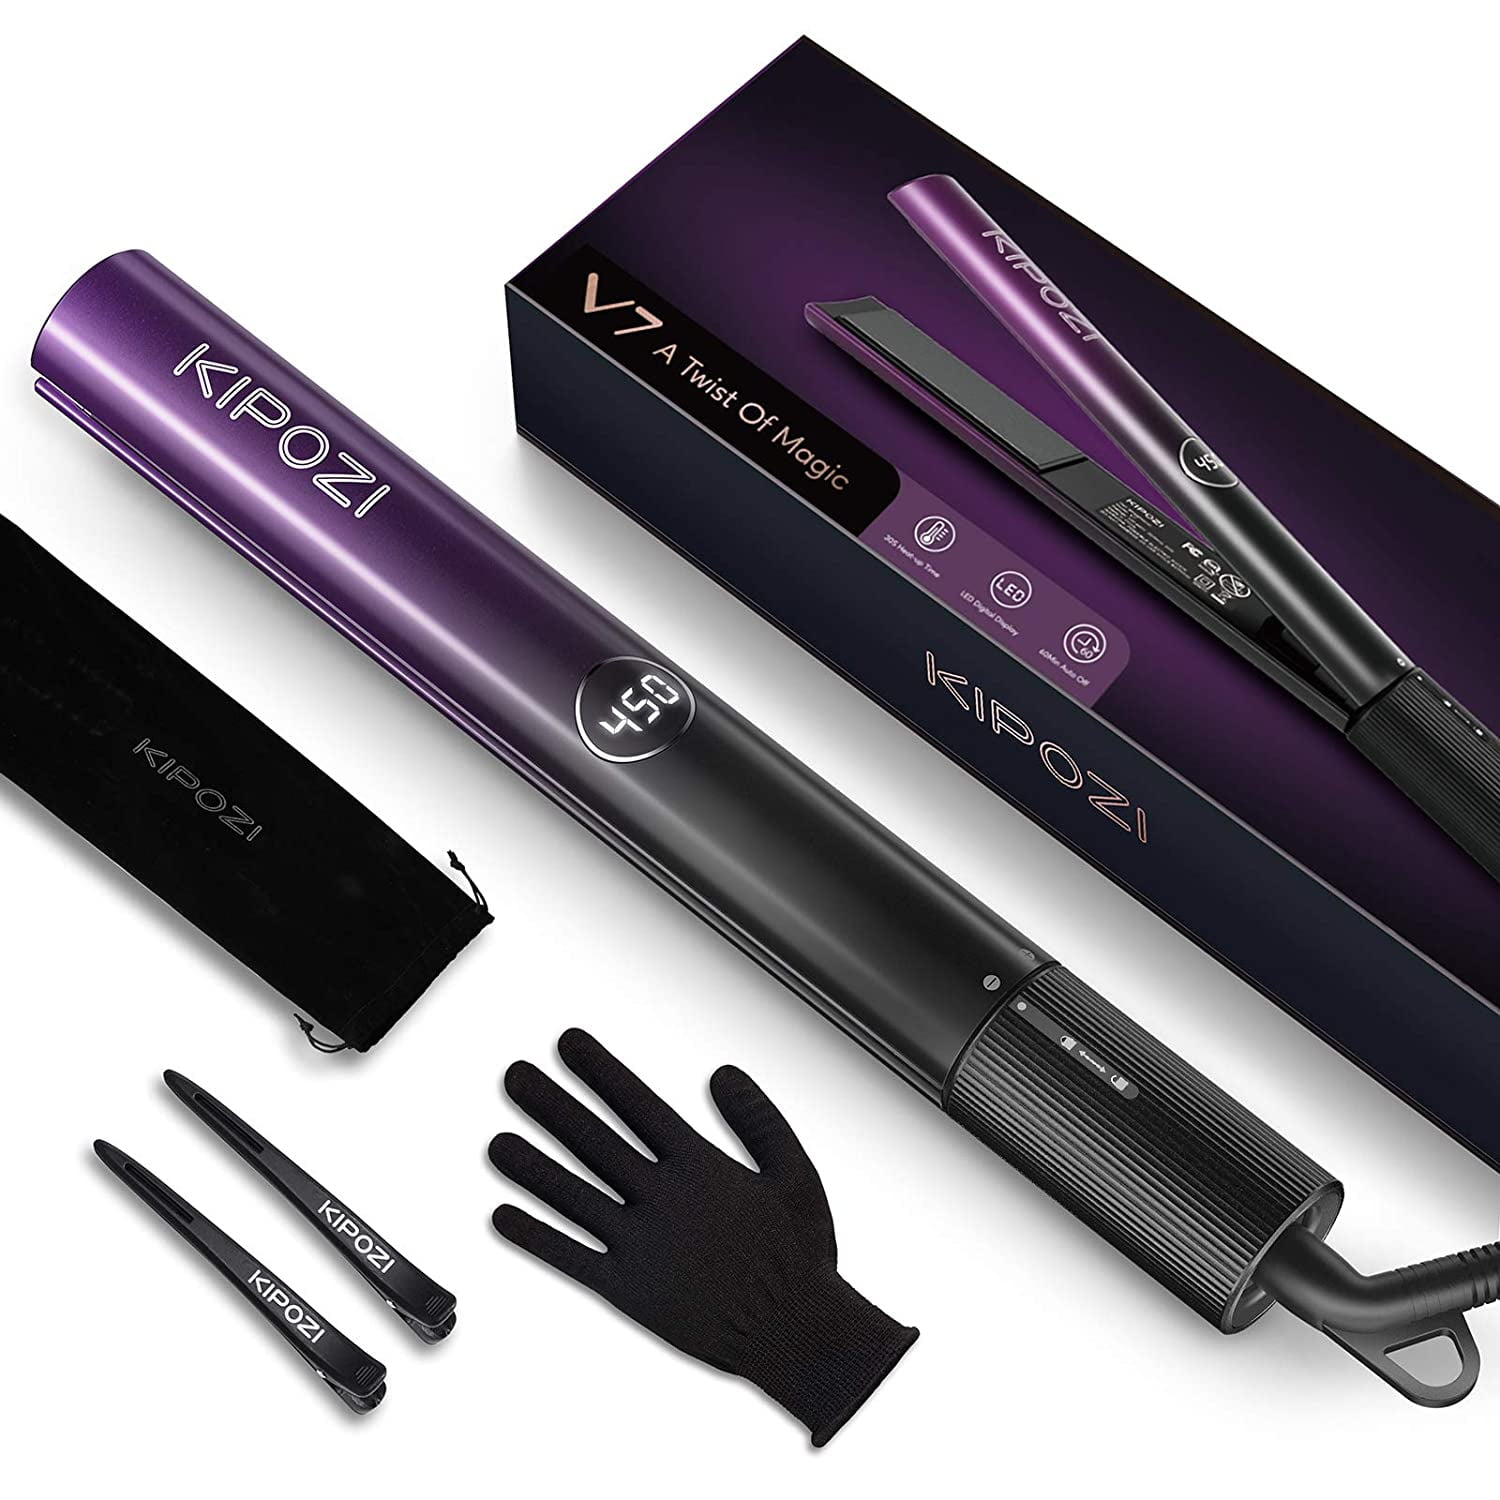 KIPOZI 2 in 1 Hair Straightener & Curling Iron Styling Tool, Fast Heat  Titanium Flat Iron, Purple 